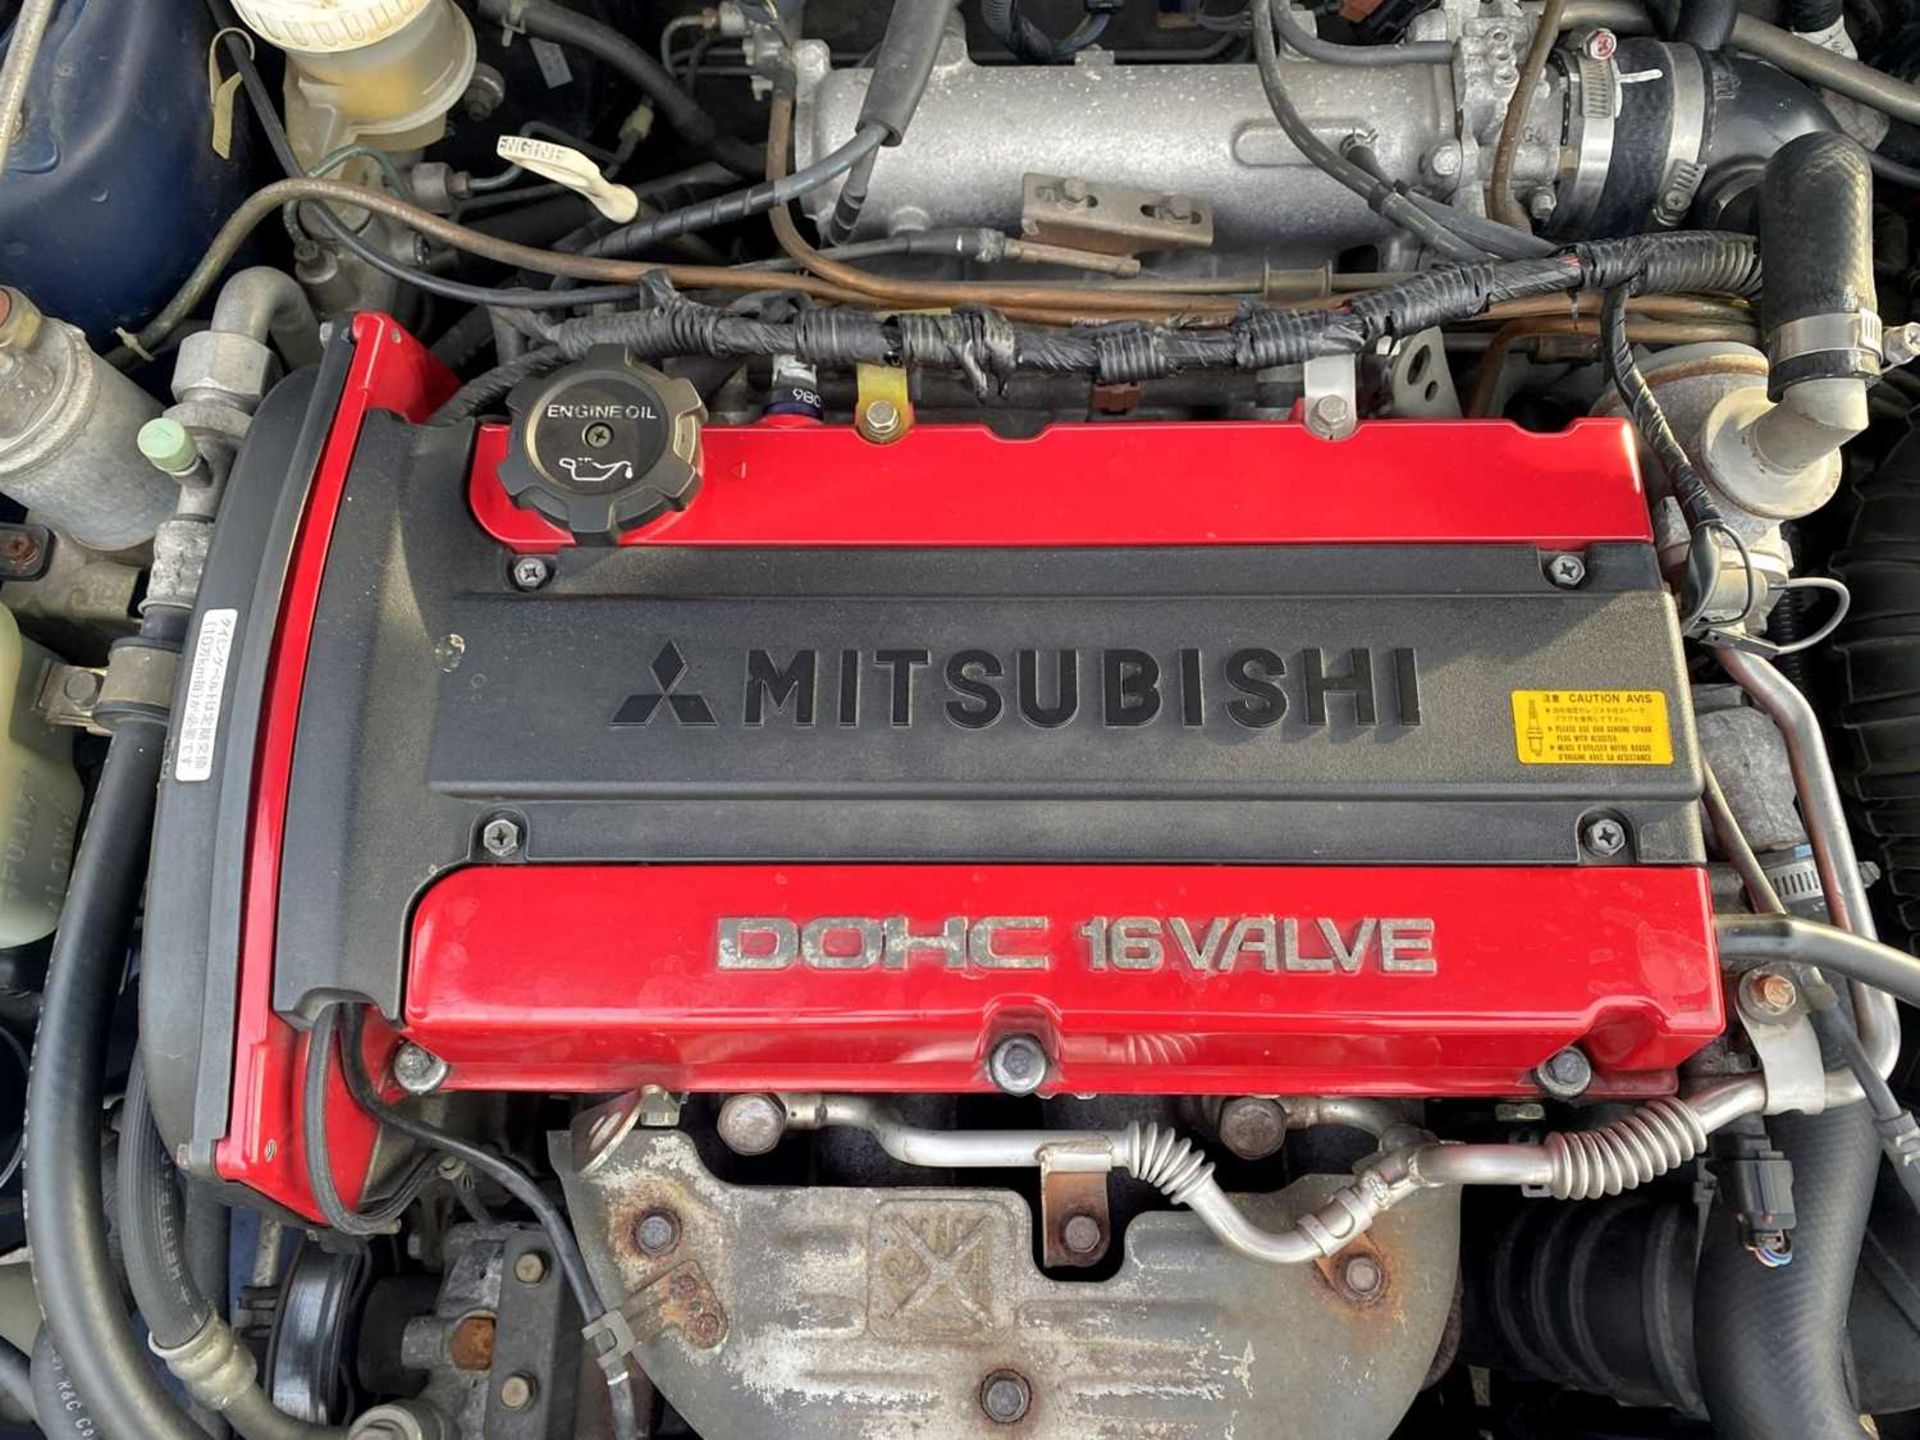 1999 Mitsubishi Lancer Evolution VI - Image 54 of 89